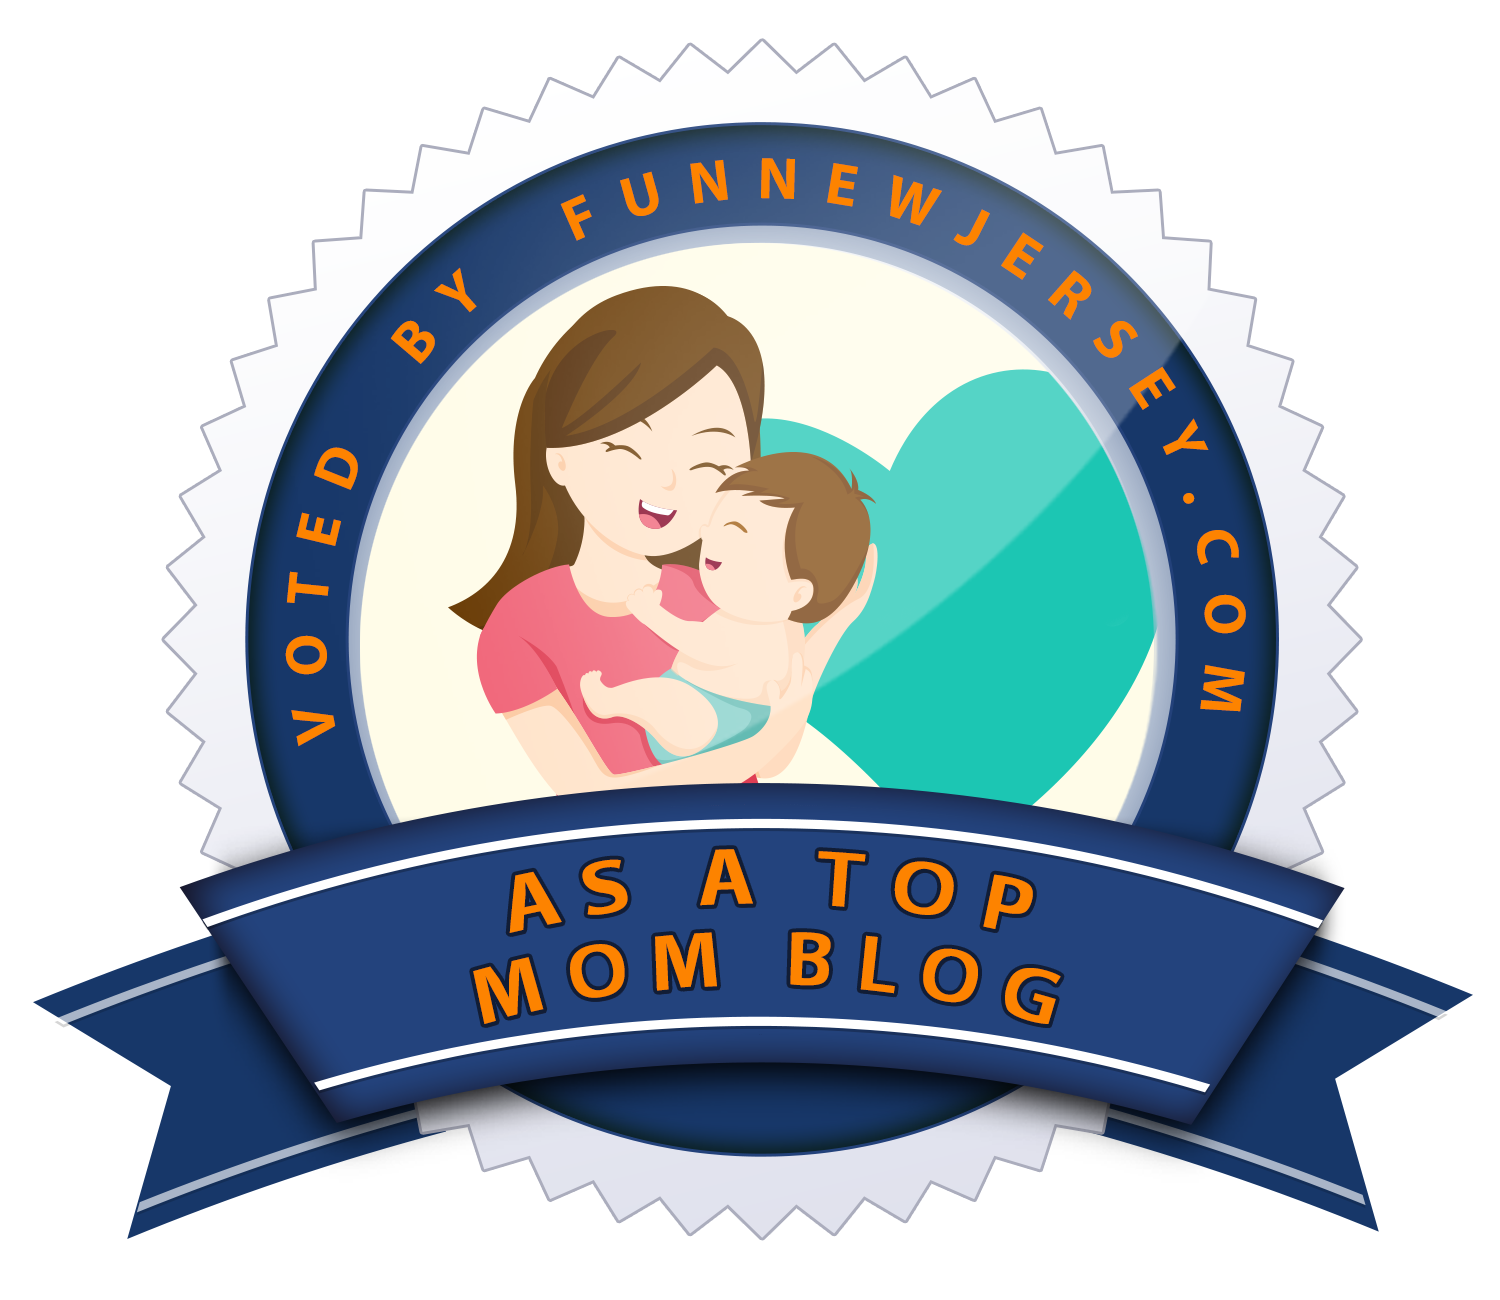 Voted Top Mom Blog in NJ